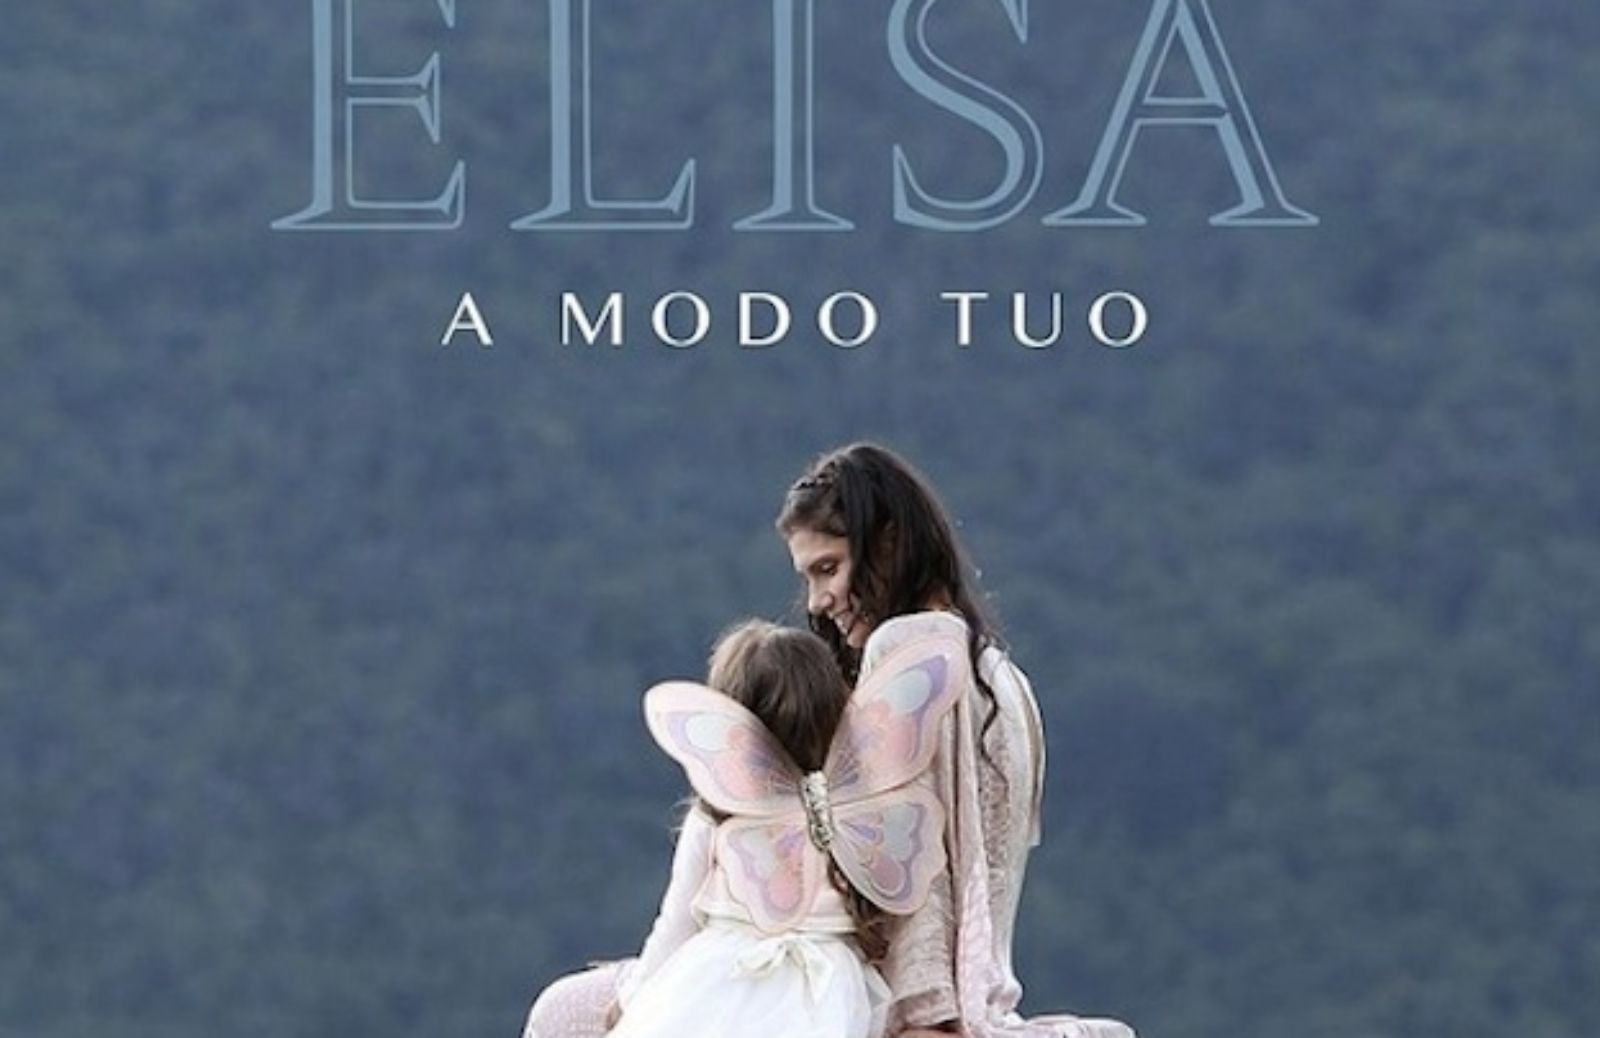 Elisa nuovo singolo: 